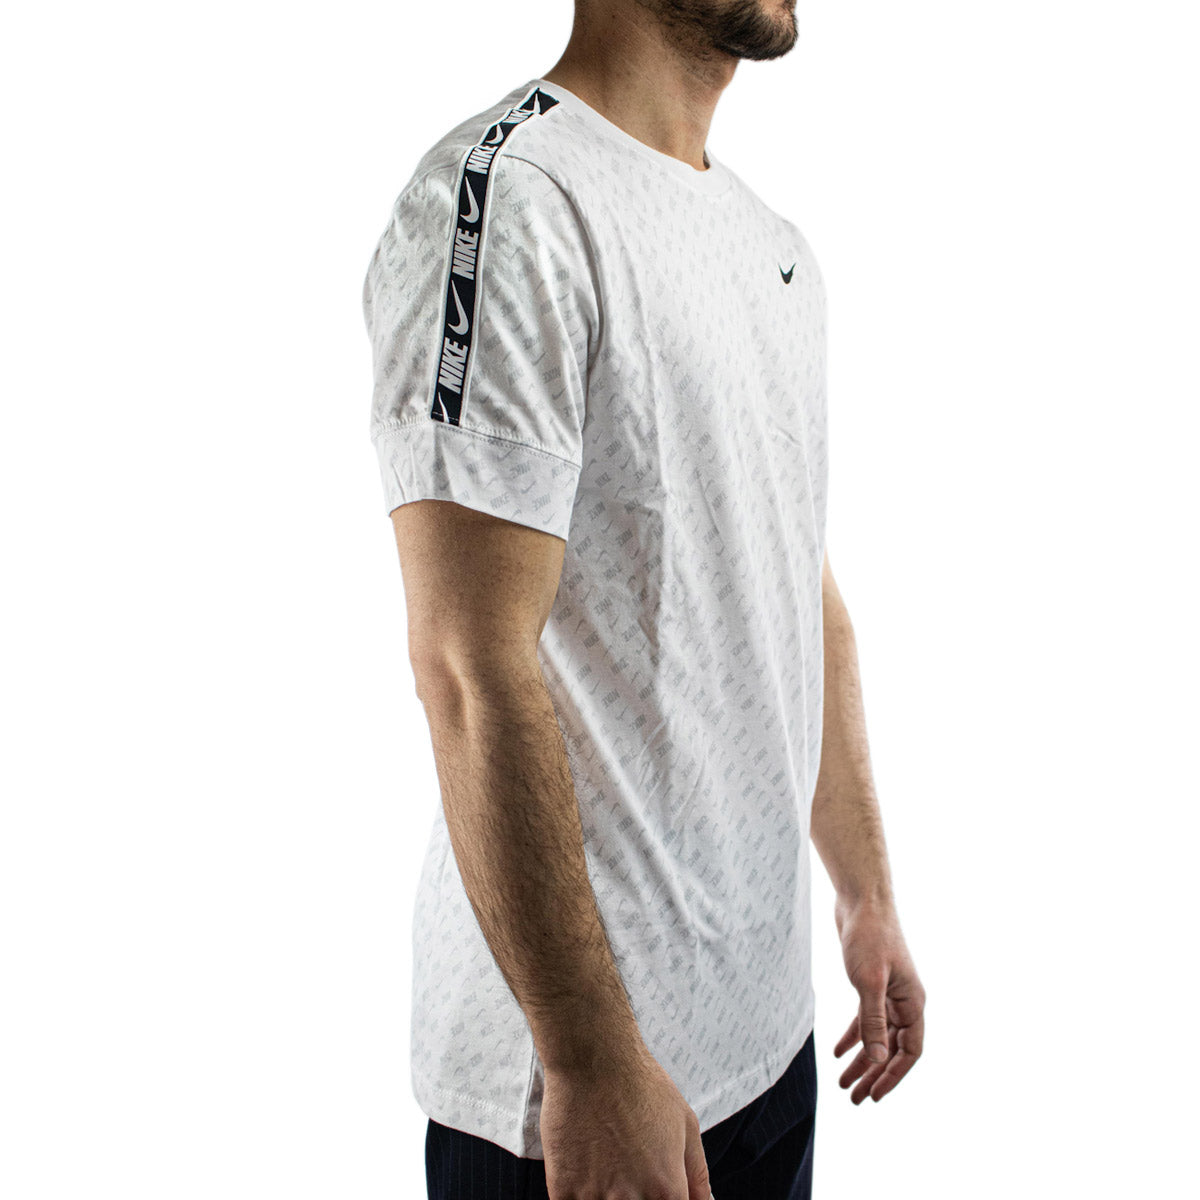 Nike Repeat Print T-Shirt DD3777-100-